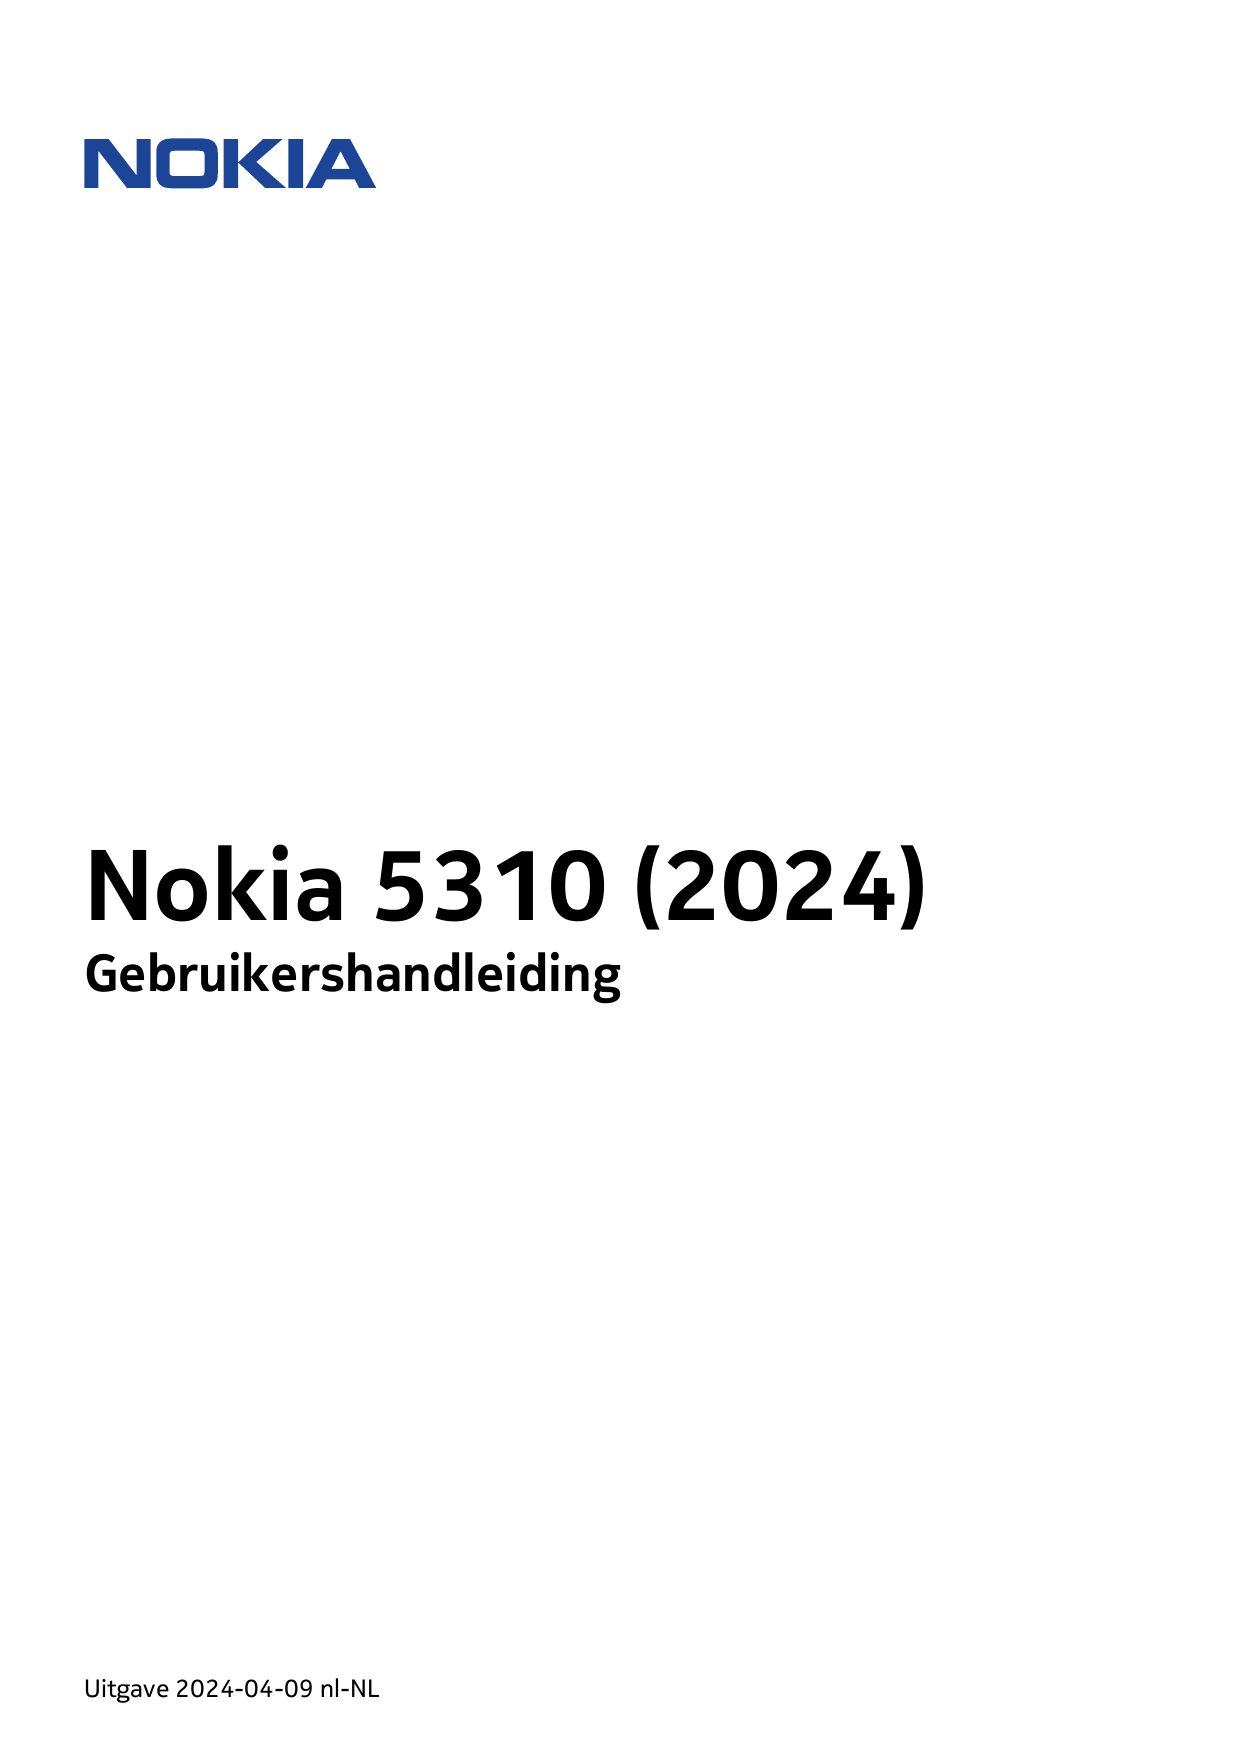 Nokia 5310 (2024)GebruikershandleidingUitgave 2024-04-09 nl-NL